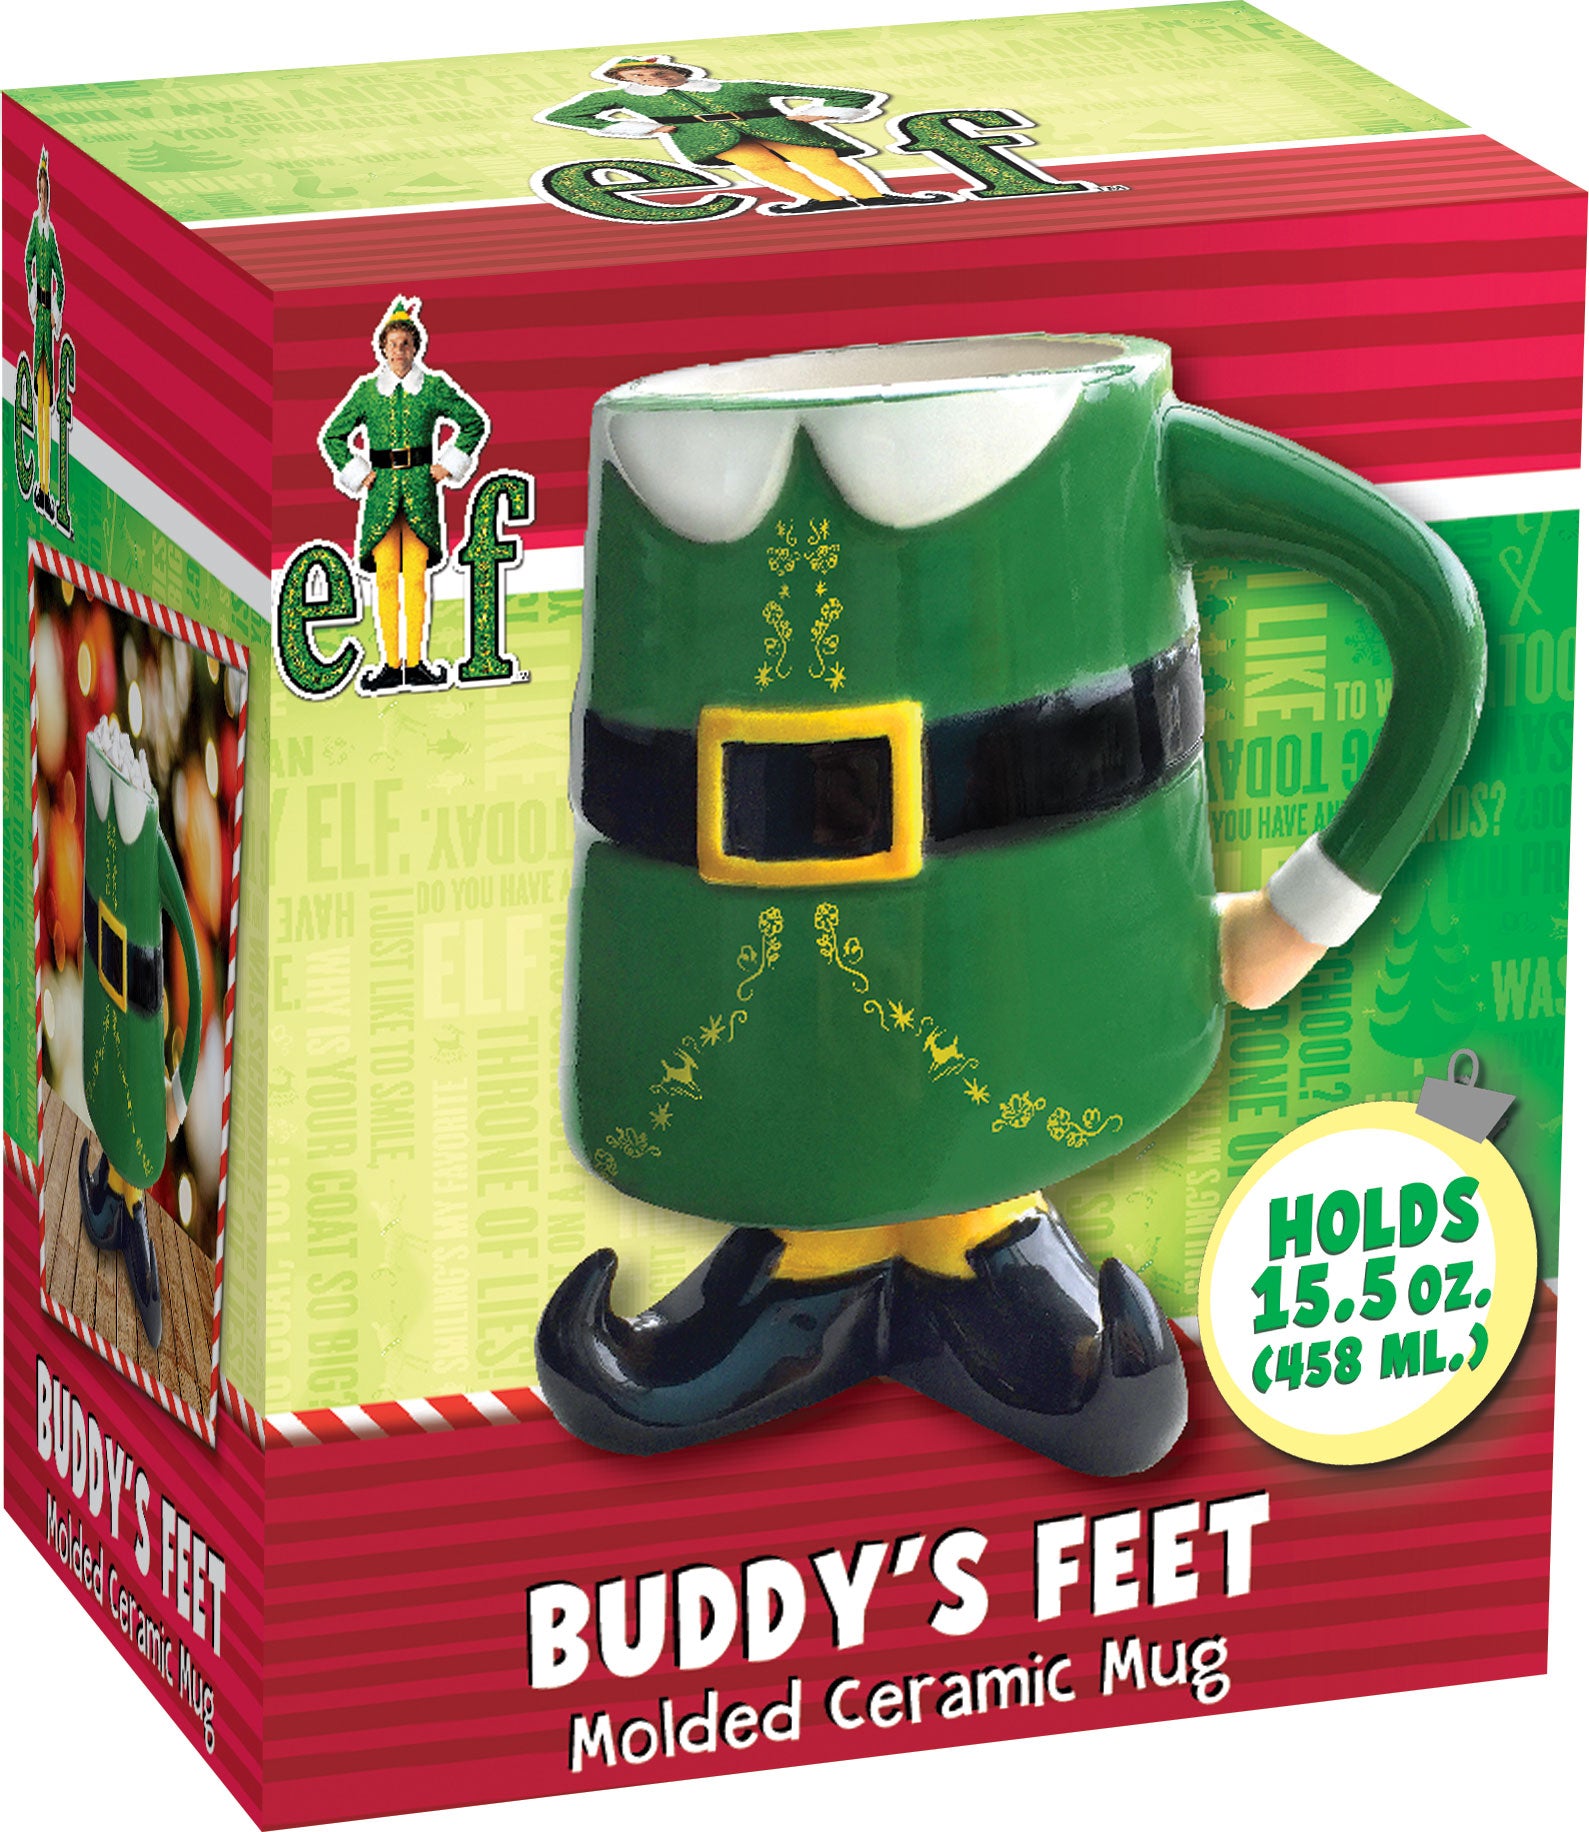 Buddy the Elf Mood Mug | By Switzer Kreations